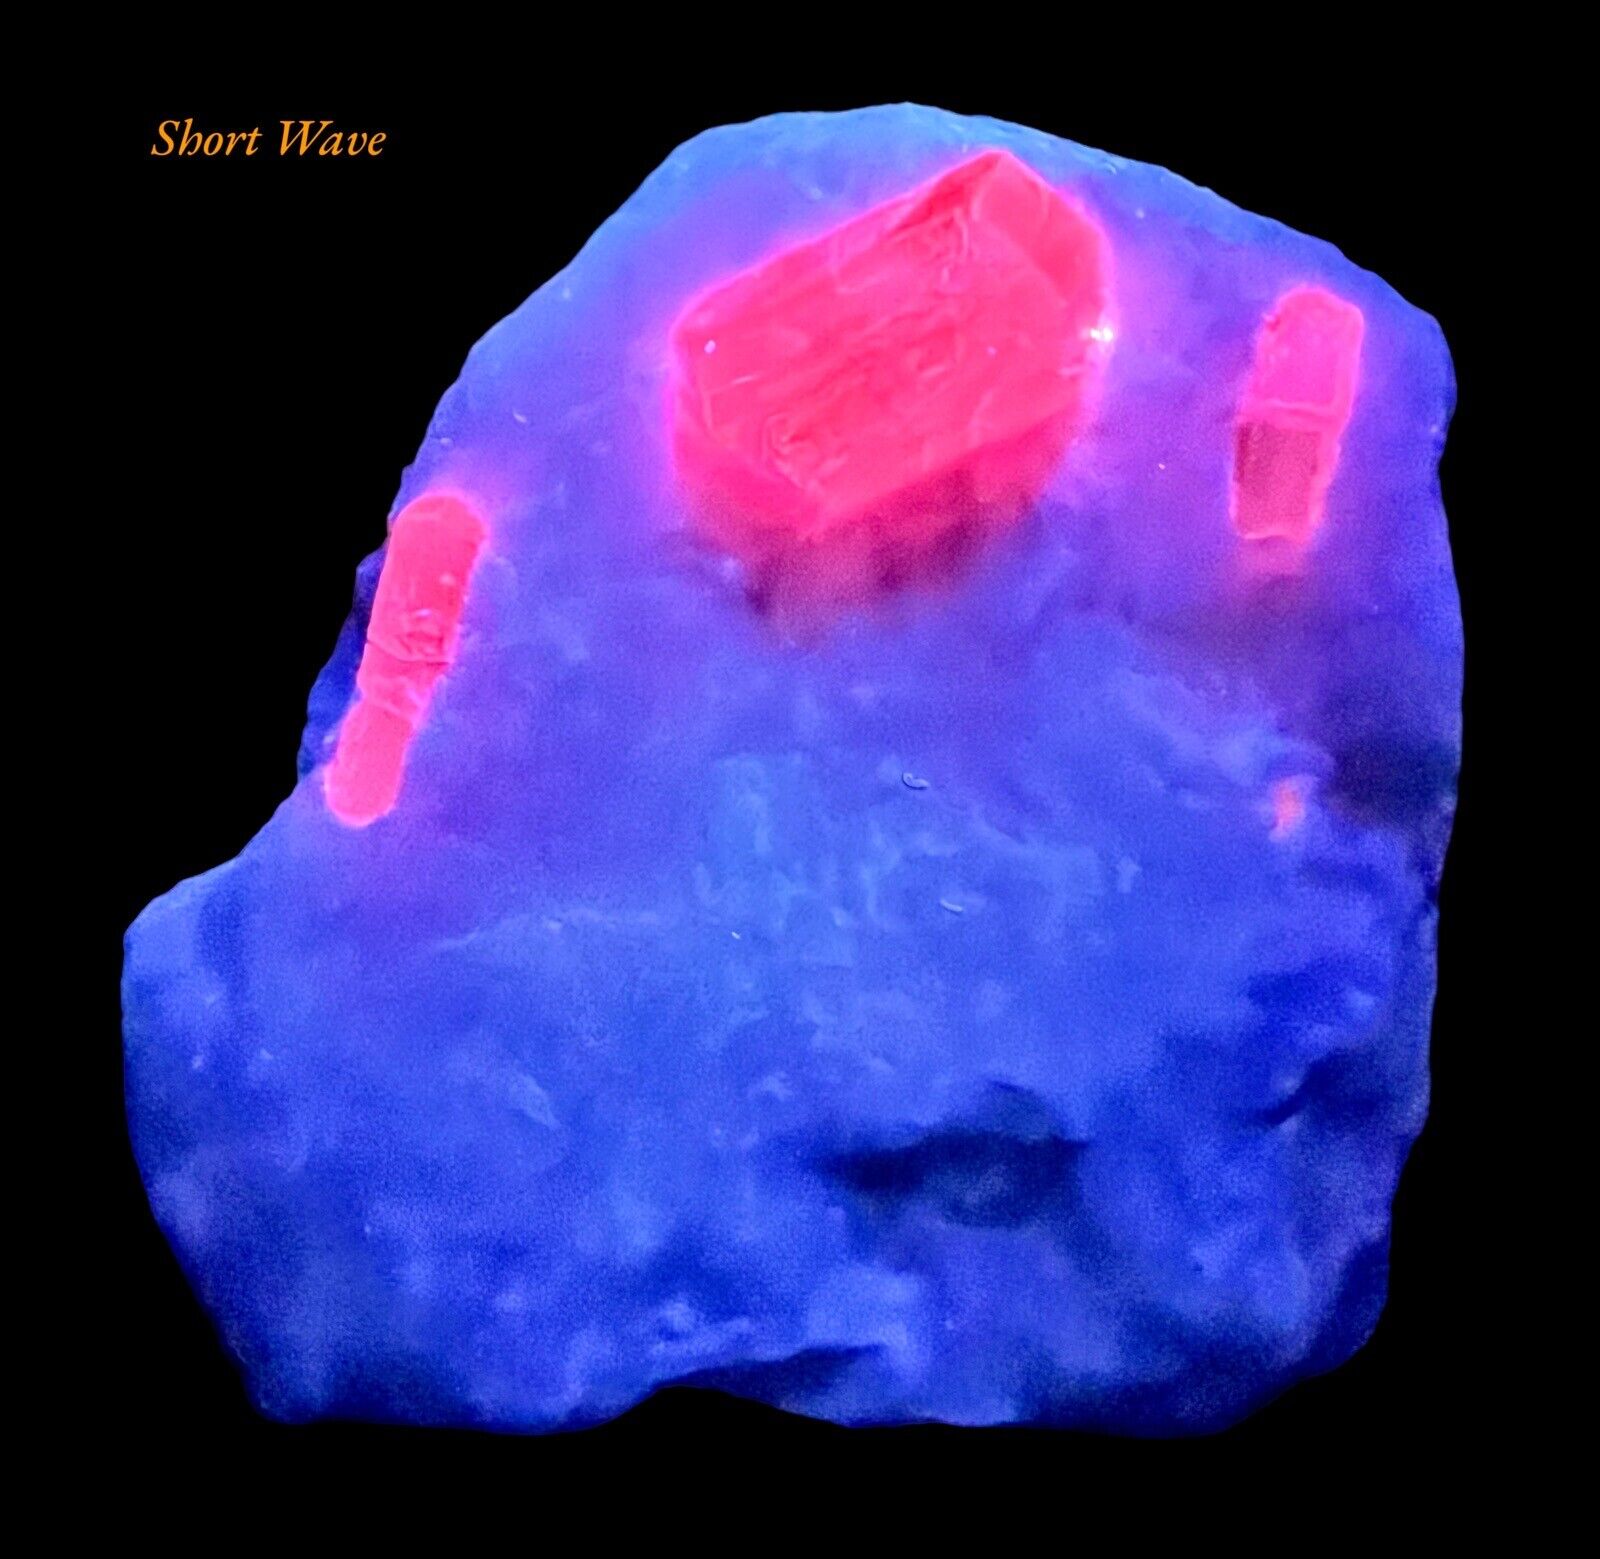 25 GM Beautifull and Lovely Fluorescent Scapolite Crystal on Matrix @Badakhshan